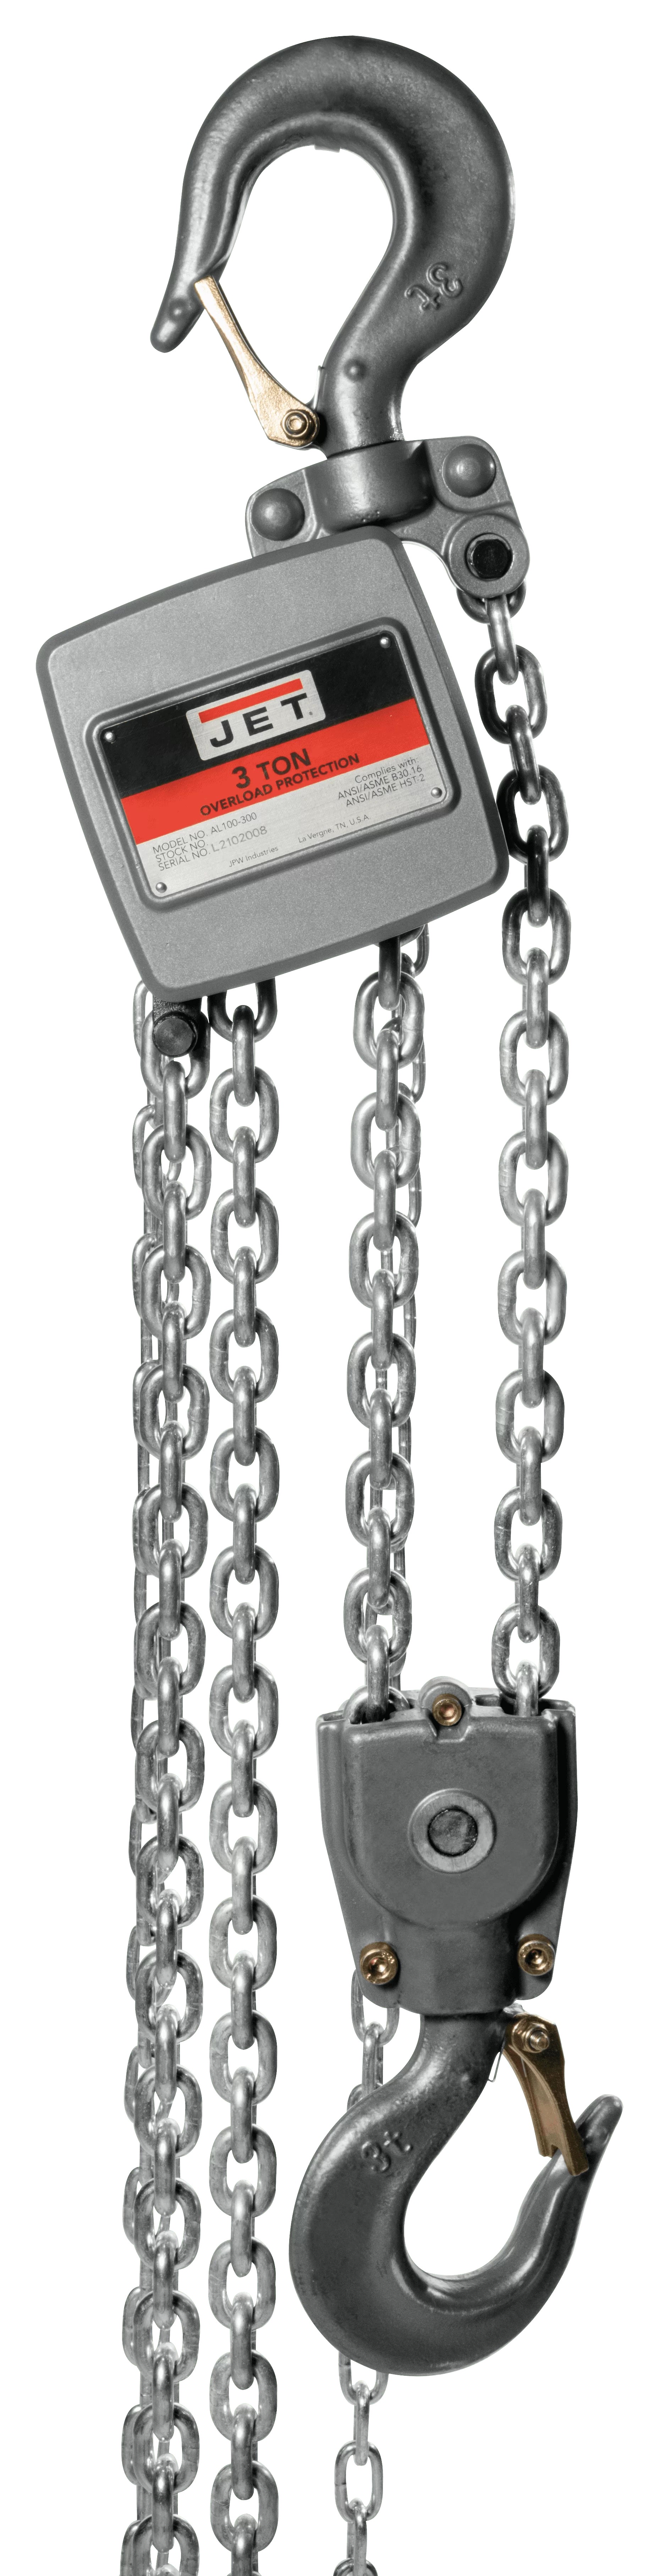 AL100-300-30 3 Ton Aluminum Hand Chain Hoist with 30ft of Lift